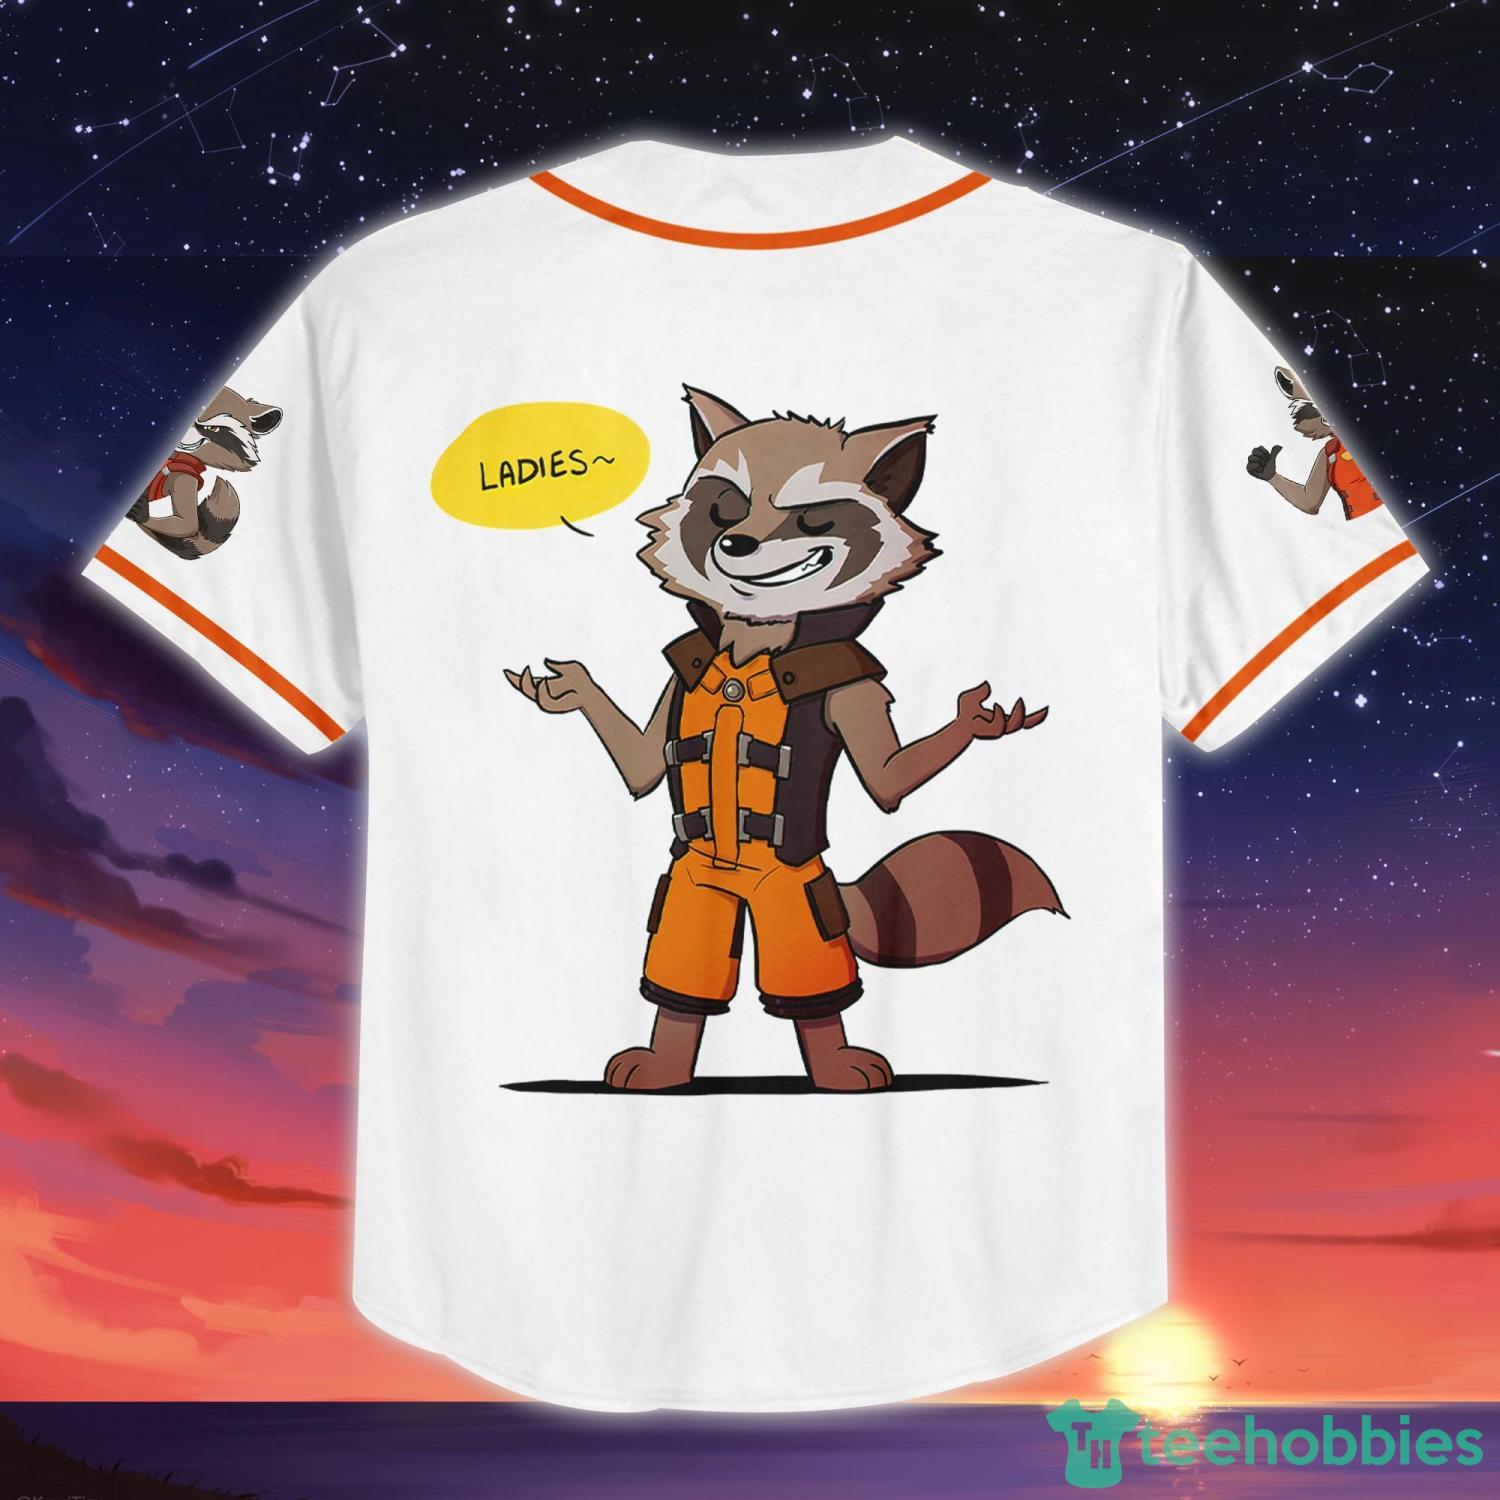 Rocket Raccoon Awesome Funny Custom Name Baseball Jersey Shirt Cute Gift  For Fan Disney - Banantees